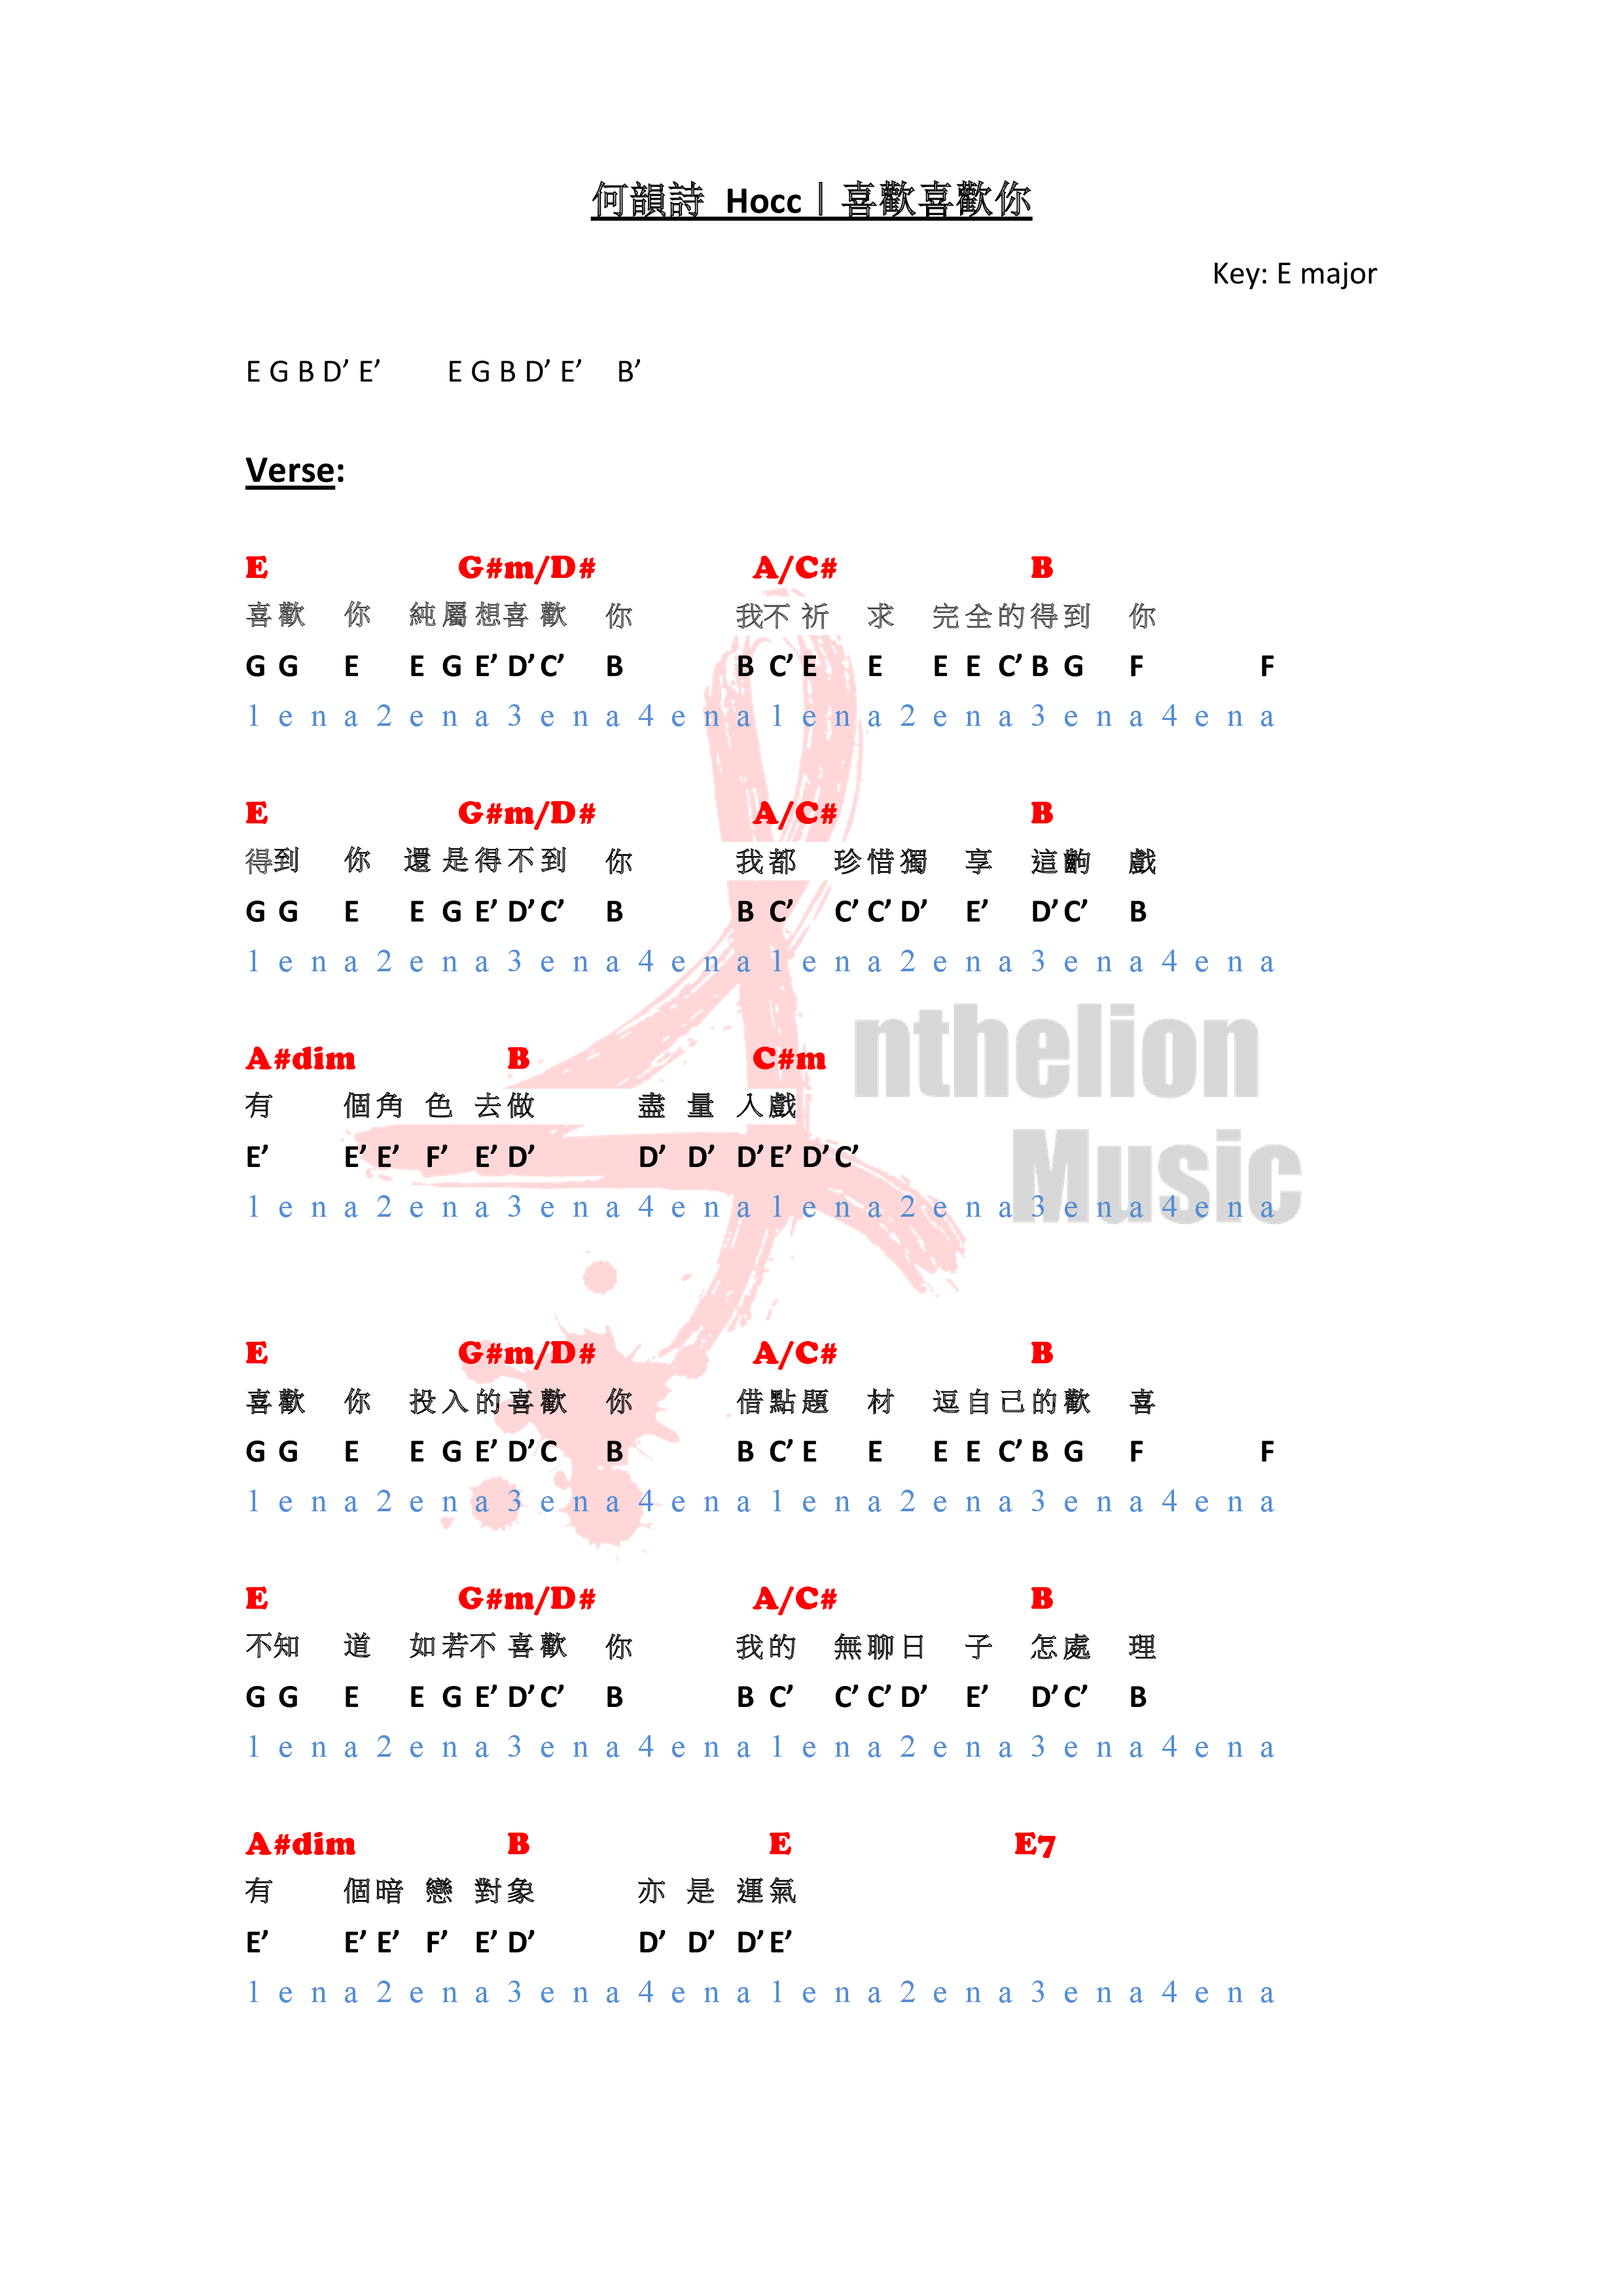 Anthelion Music 譜 template (喜歡喜歡你) E key-0.png